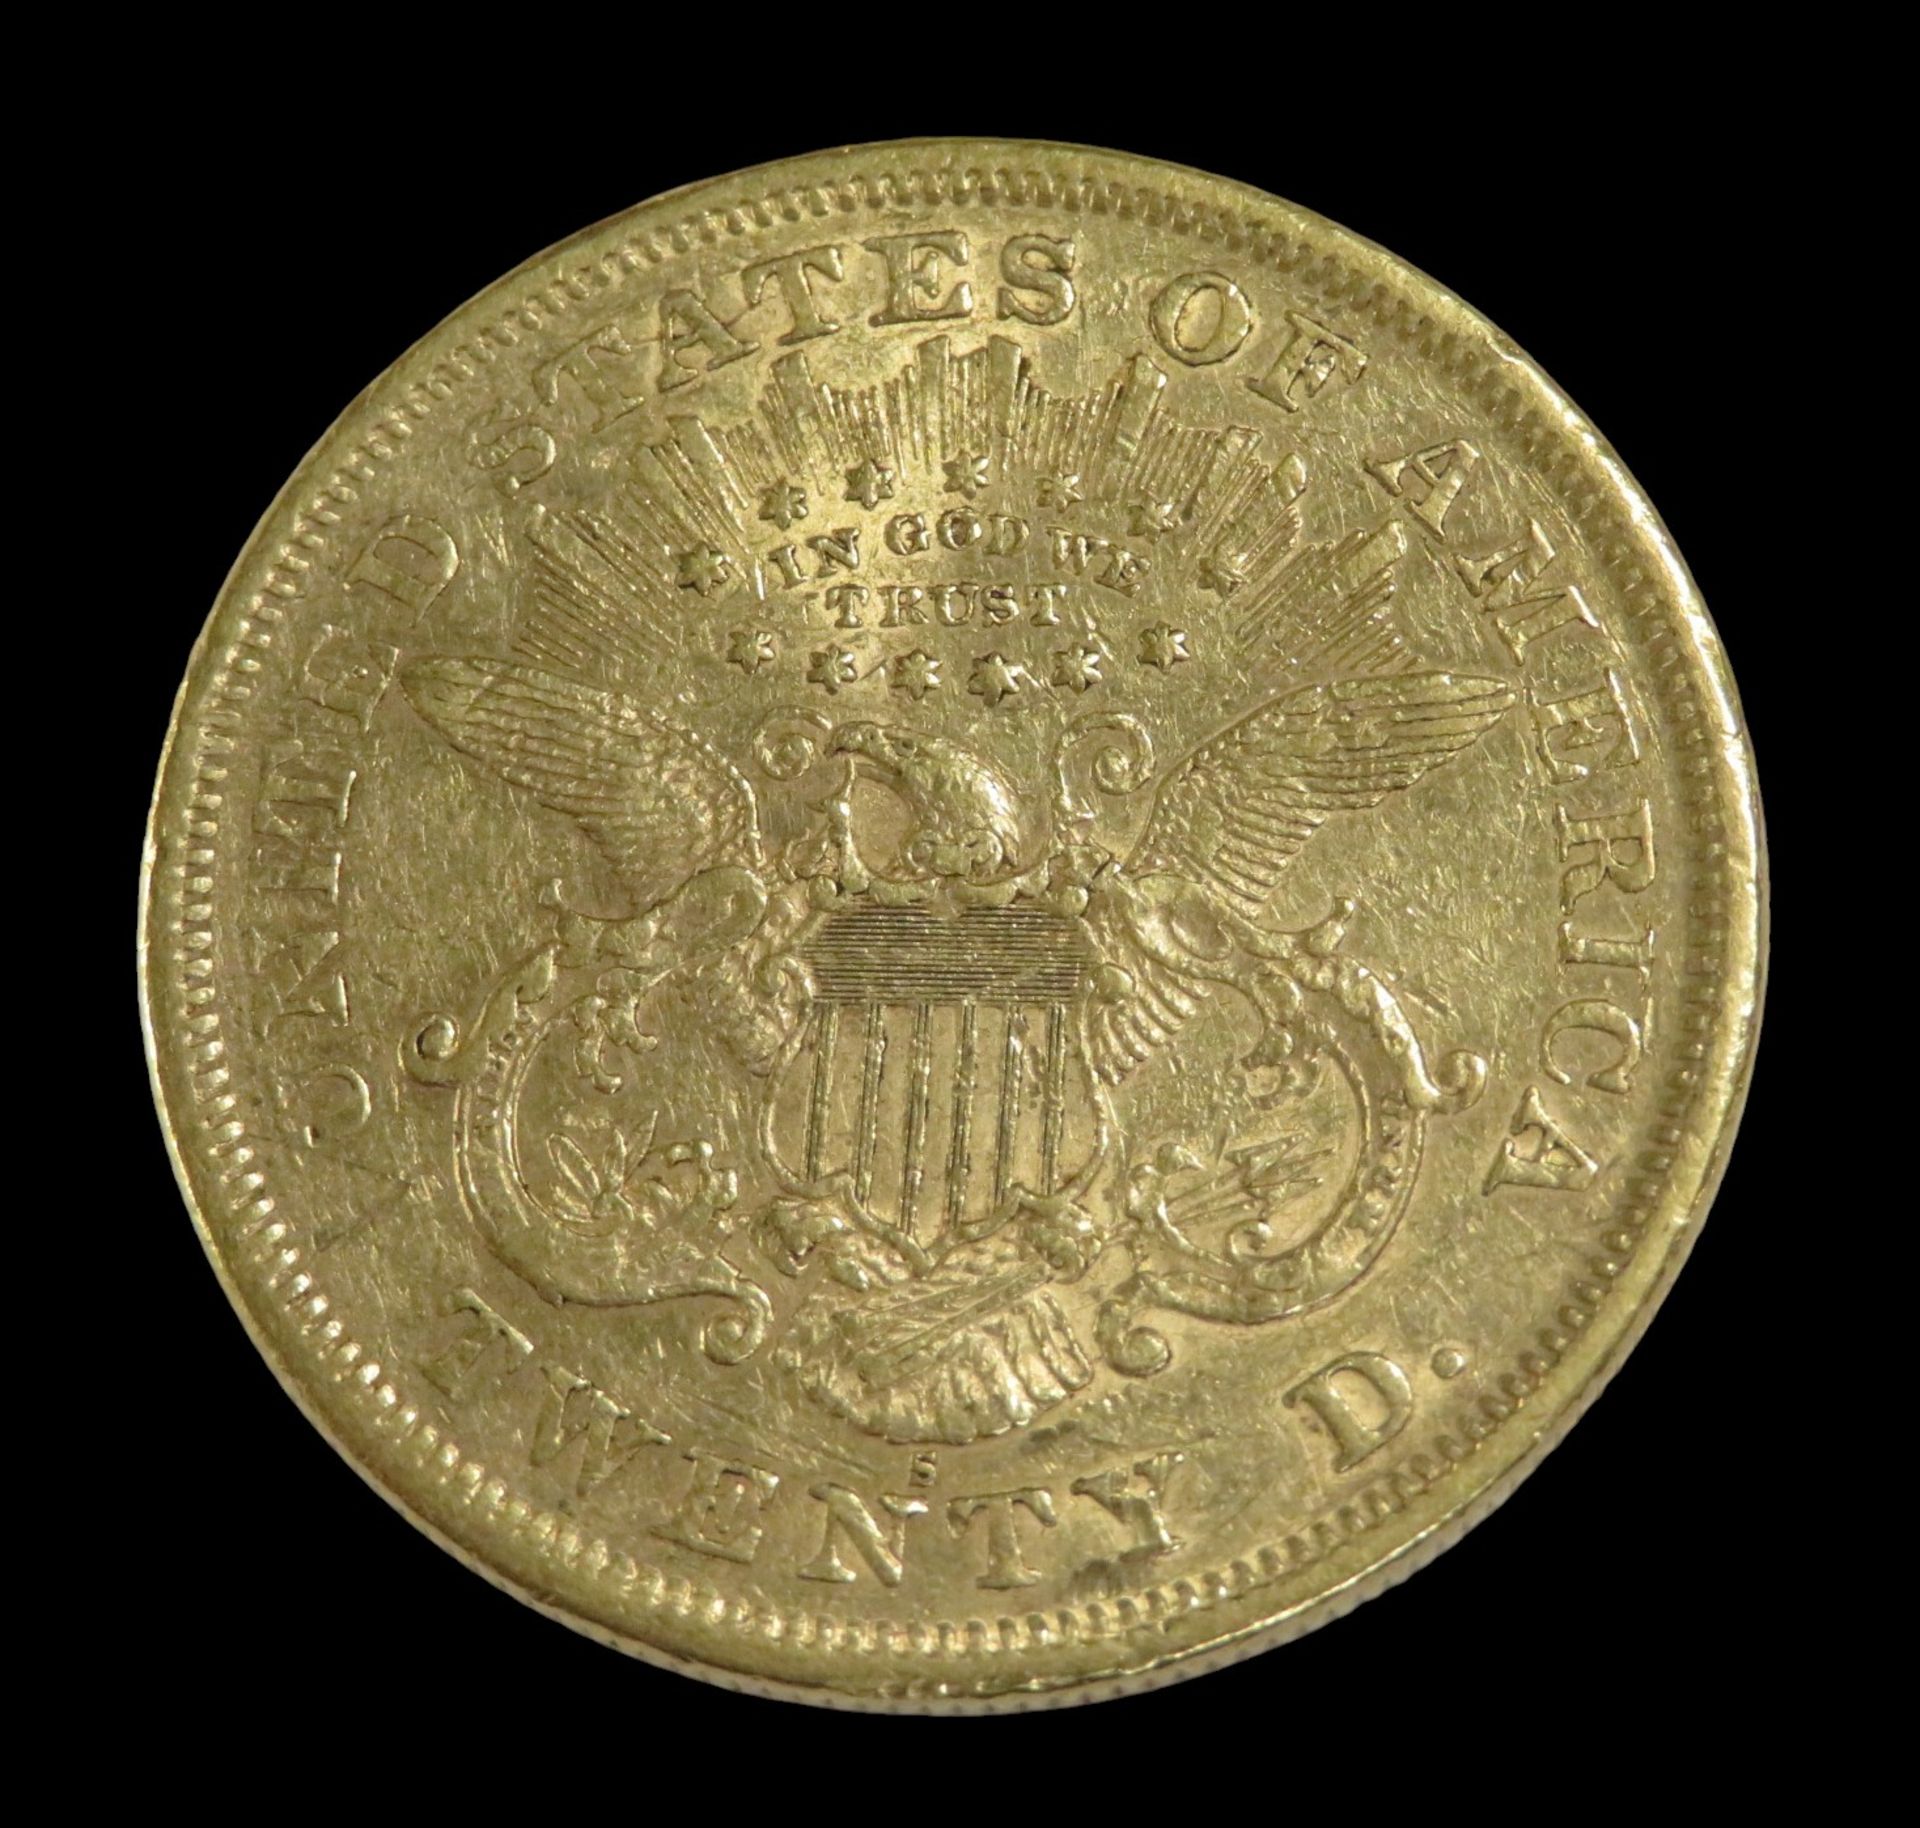 Goldmünze, USA, Liberty Head, 20 Dollars, 1875, Gold 900/000, 33,3 g, d 3,4 cm. - Bild 2 aus 2